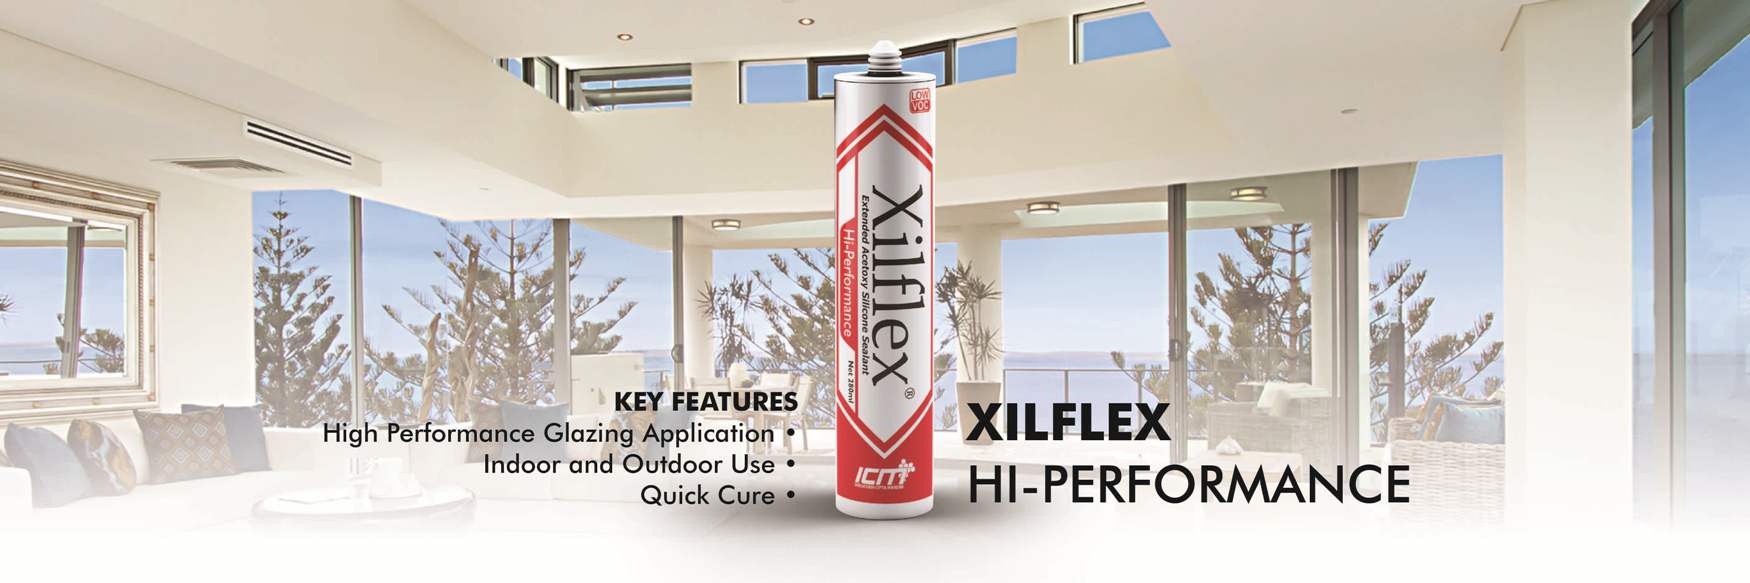 XILFLEX Hi-Performance